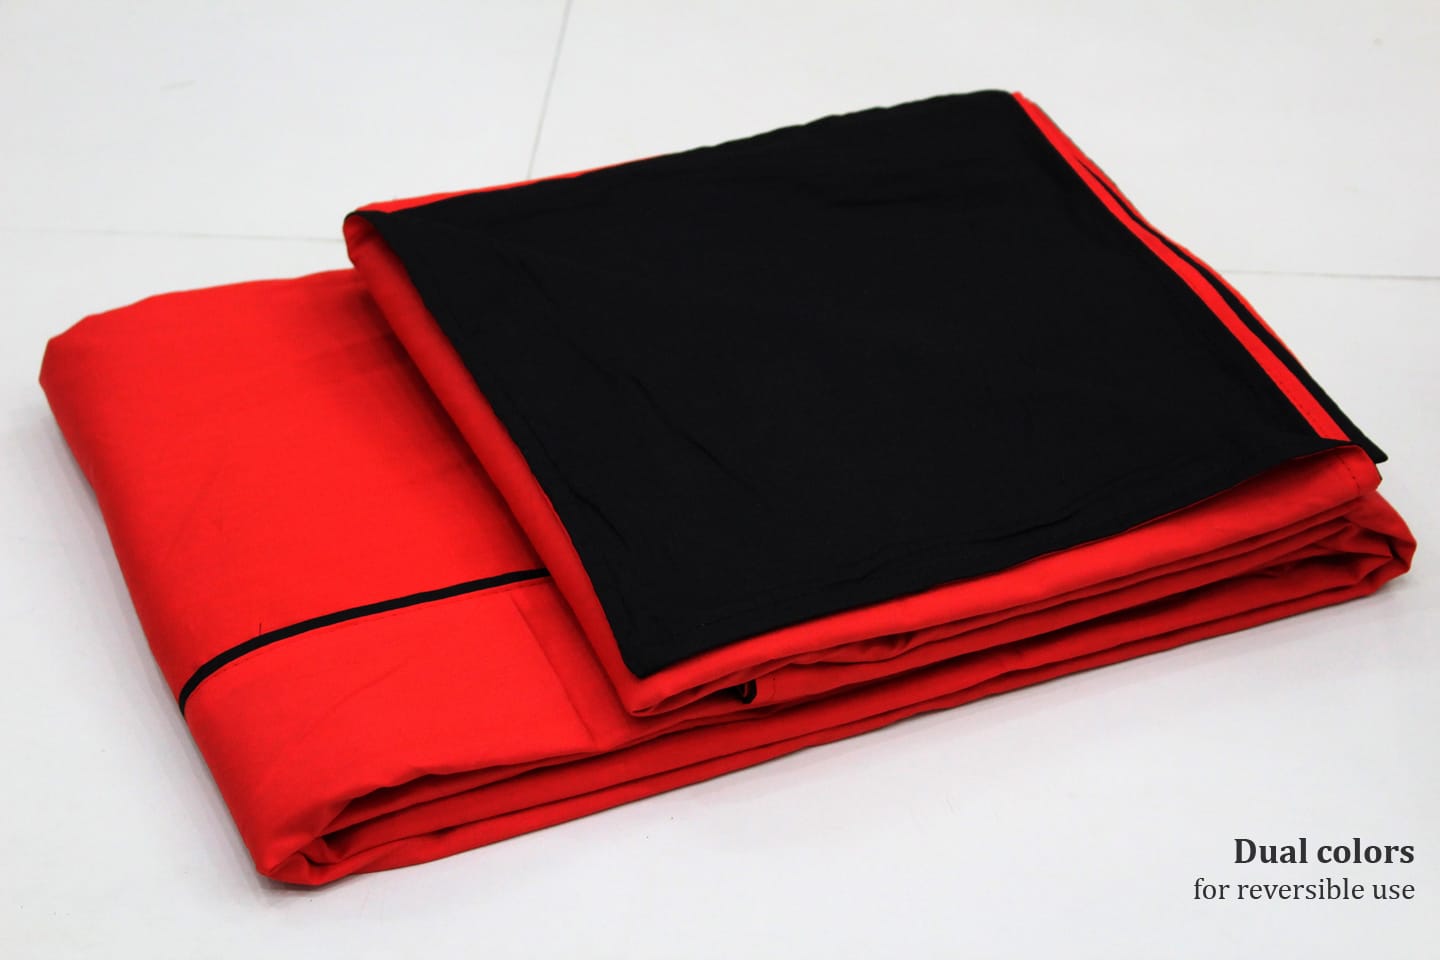 Soft Plain 210 Mercerised Cotton Duvet Cover In Black & Red Online At Best Prices